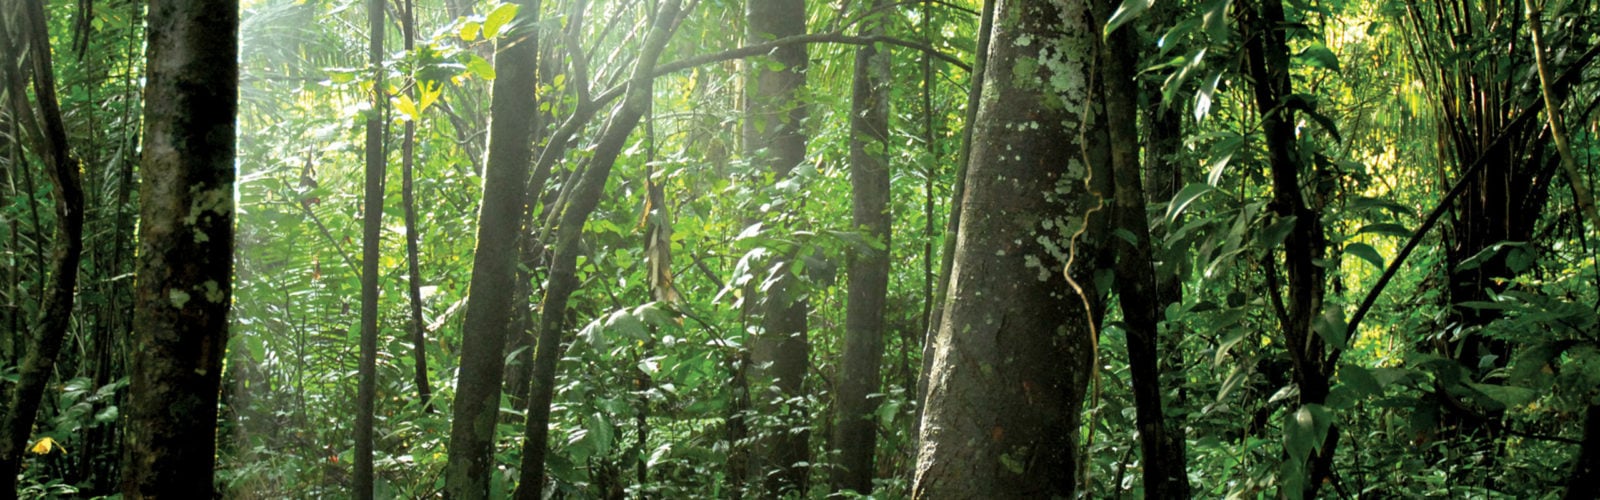 Trees of the Peruvian Amazon Rainforest